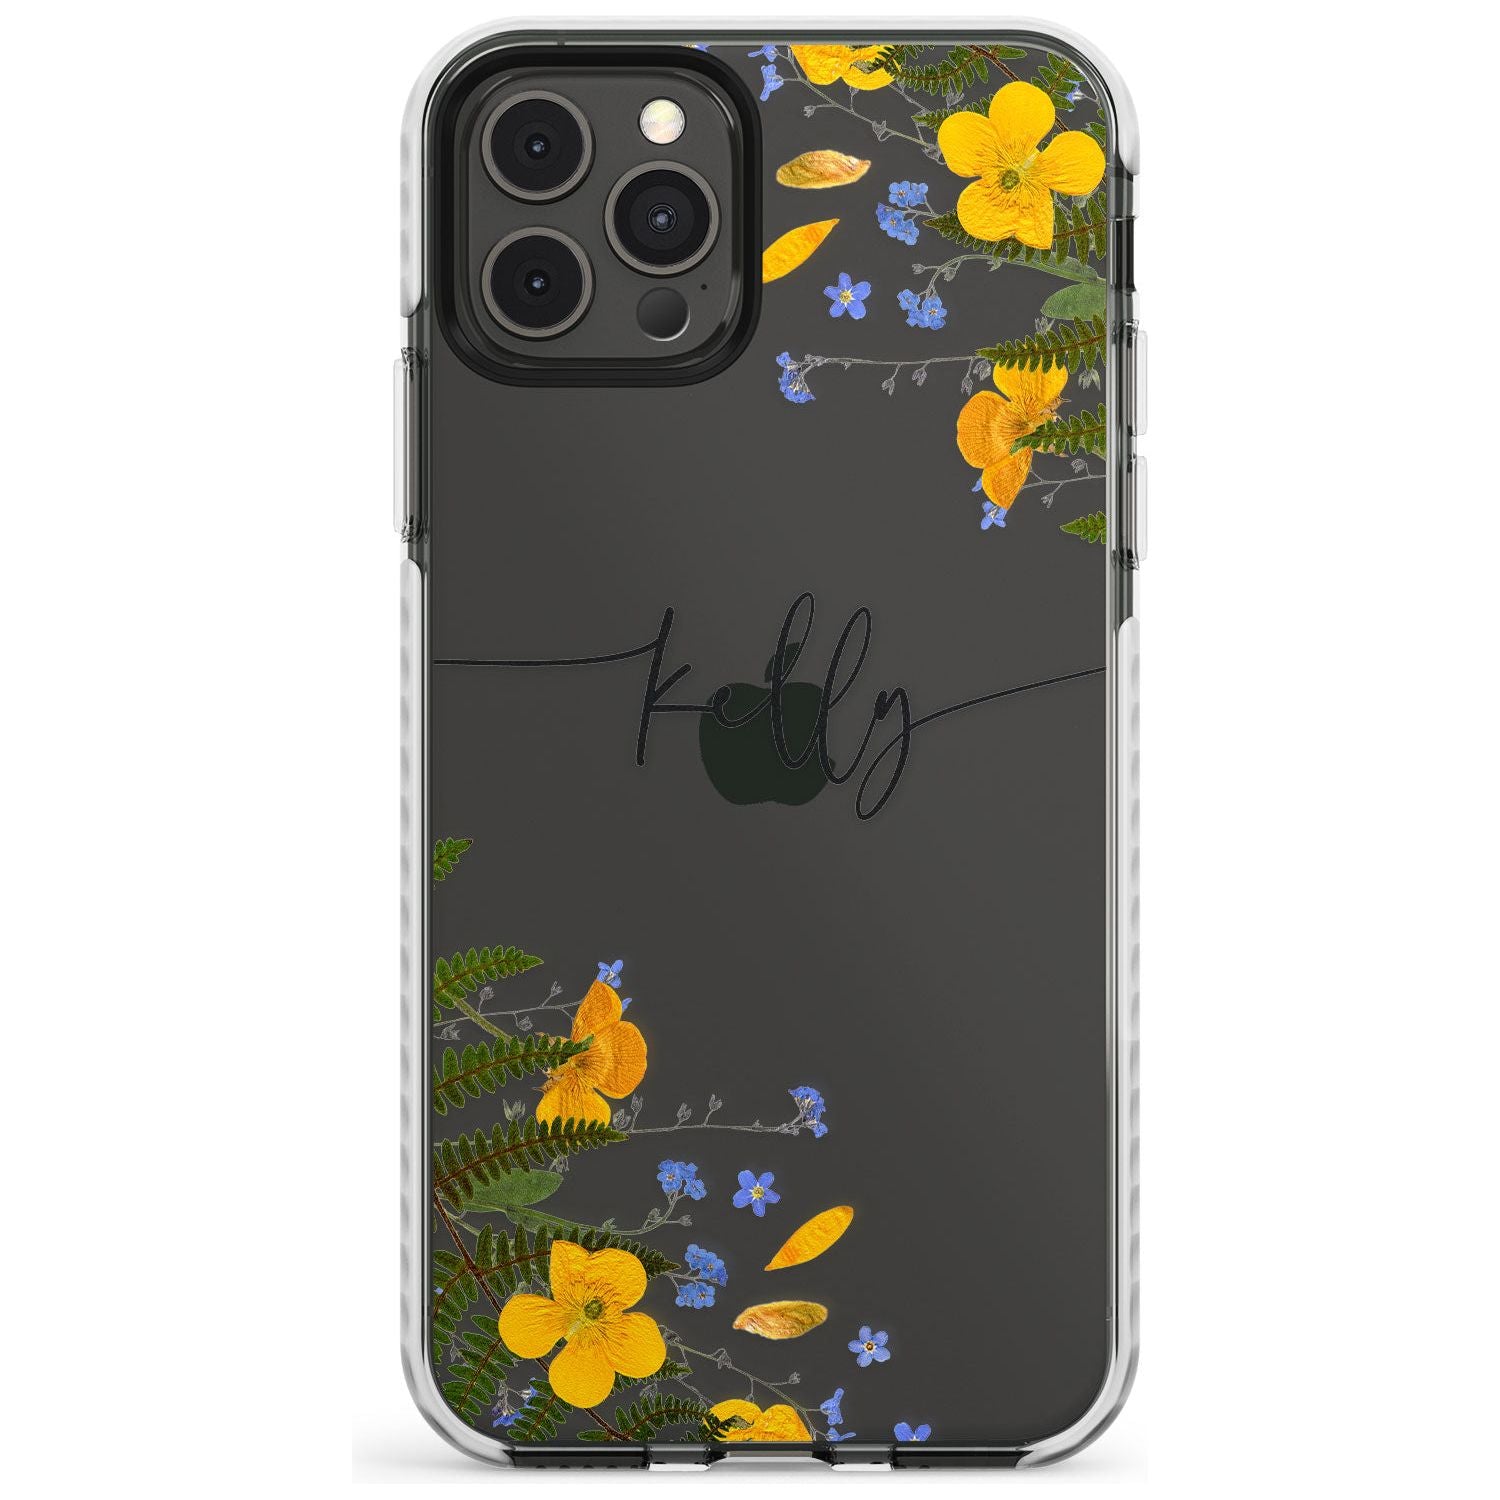 Custom Ferns & Flowers Slim TPU Phone Case for iPhone 11 Pro Max